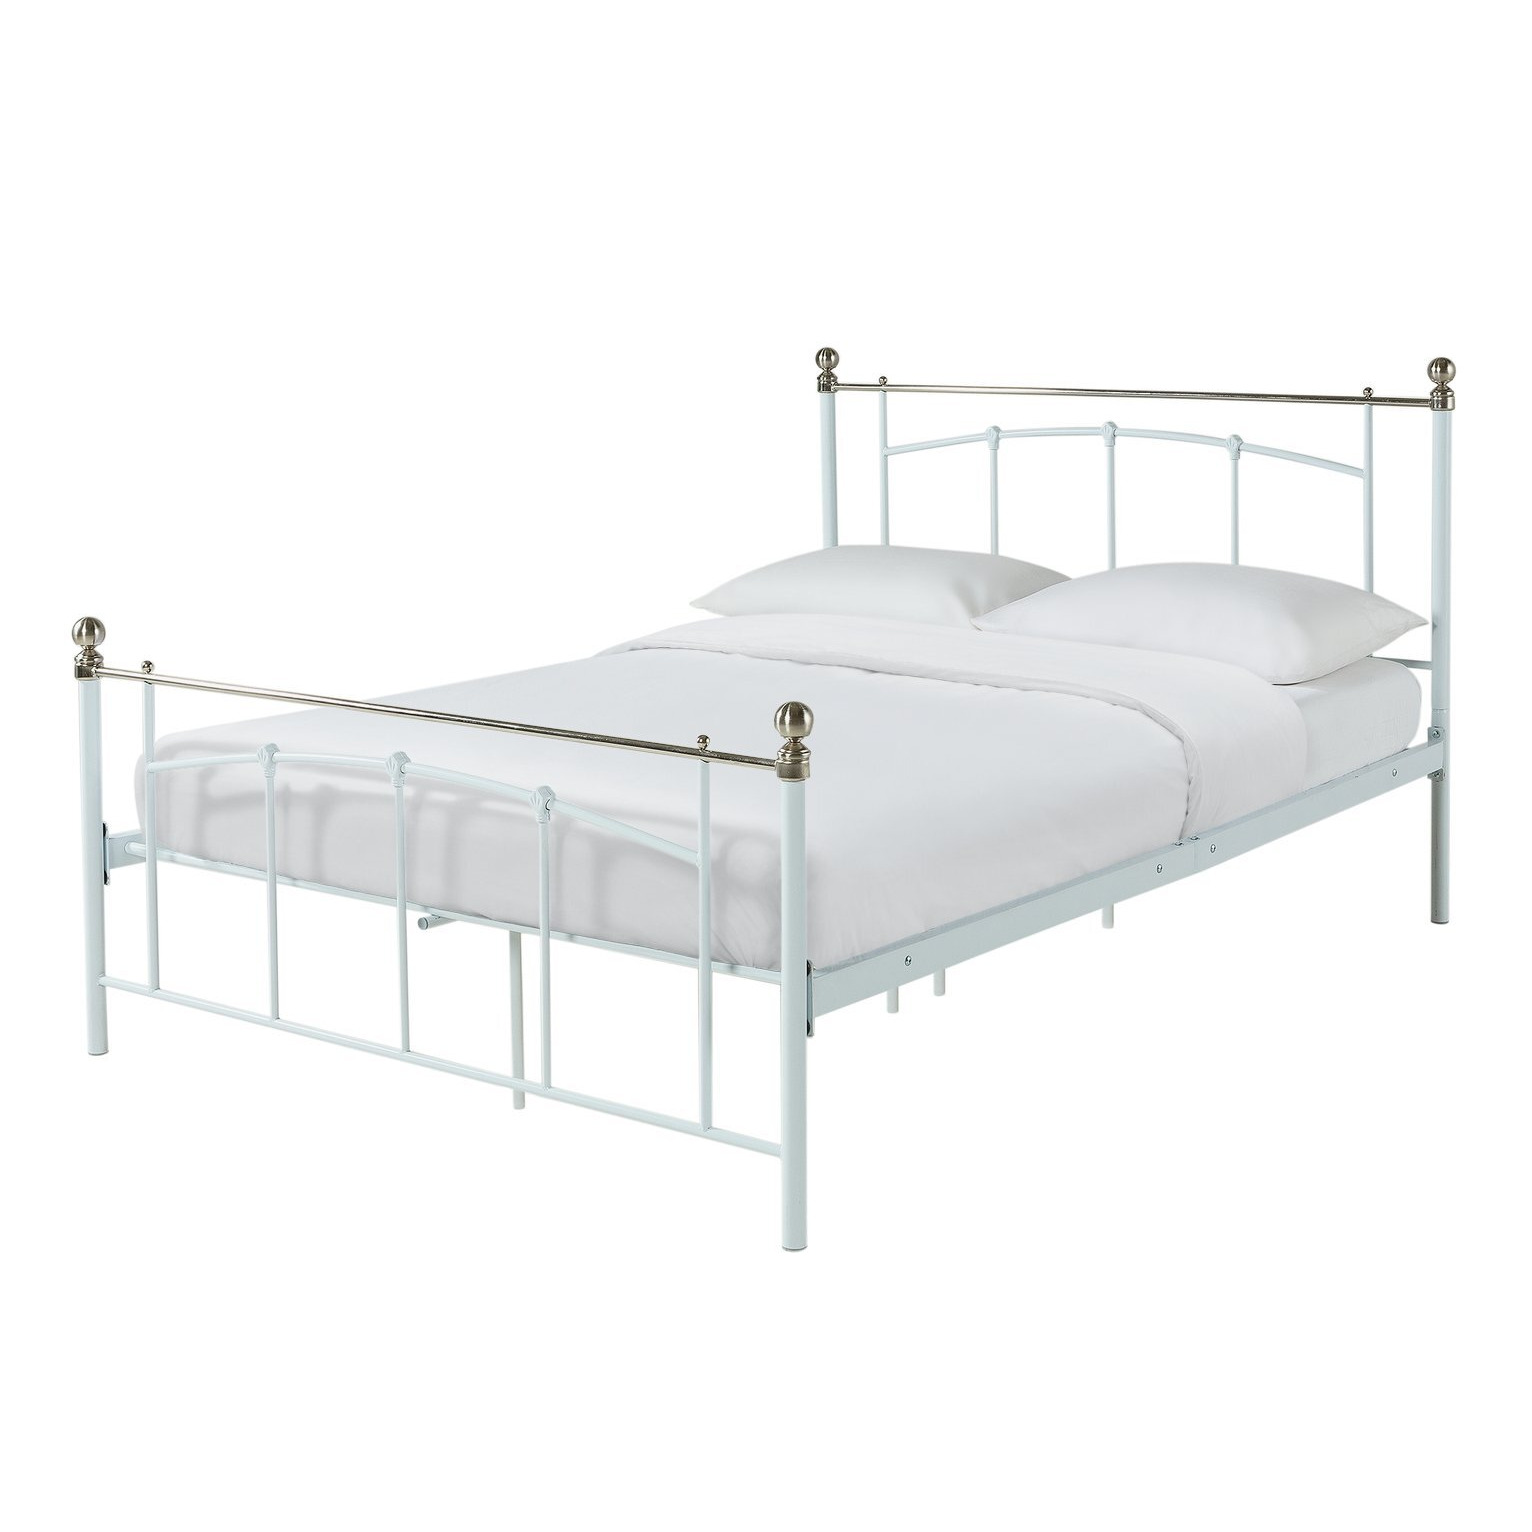 Argos Home Yani Double Metal Bed Frame - White - image 1